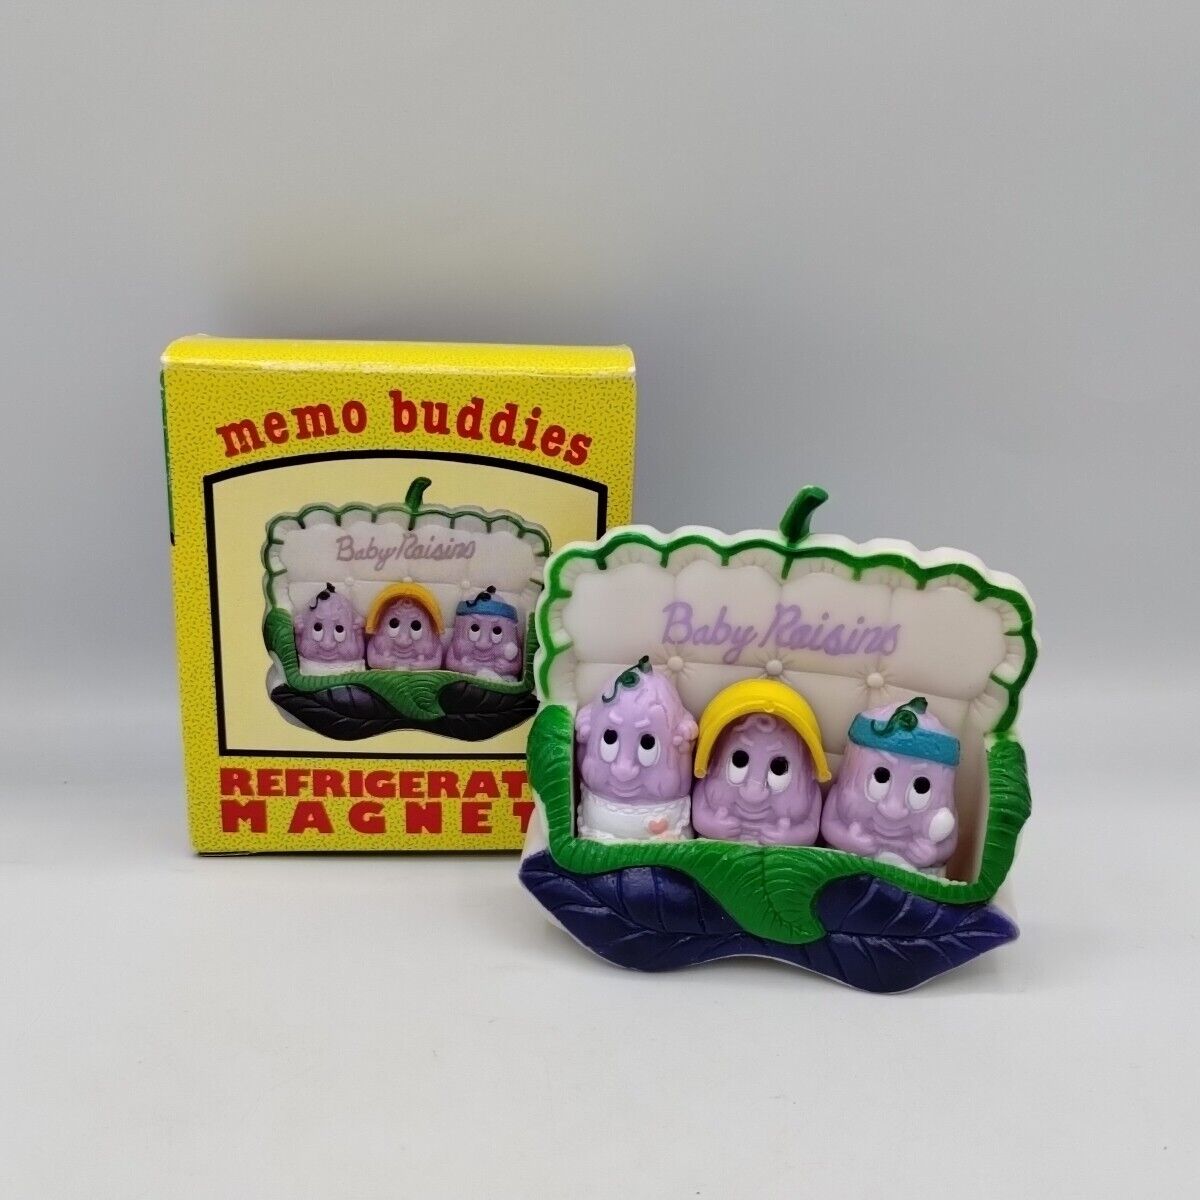 Vintage Anthropomorphic Baby Raisins Memo Buddies Refrigerator Memo Magnets Set